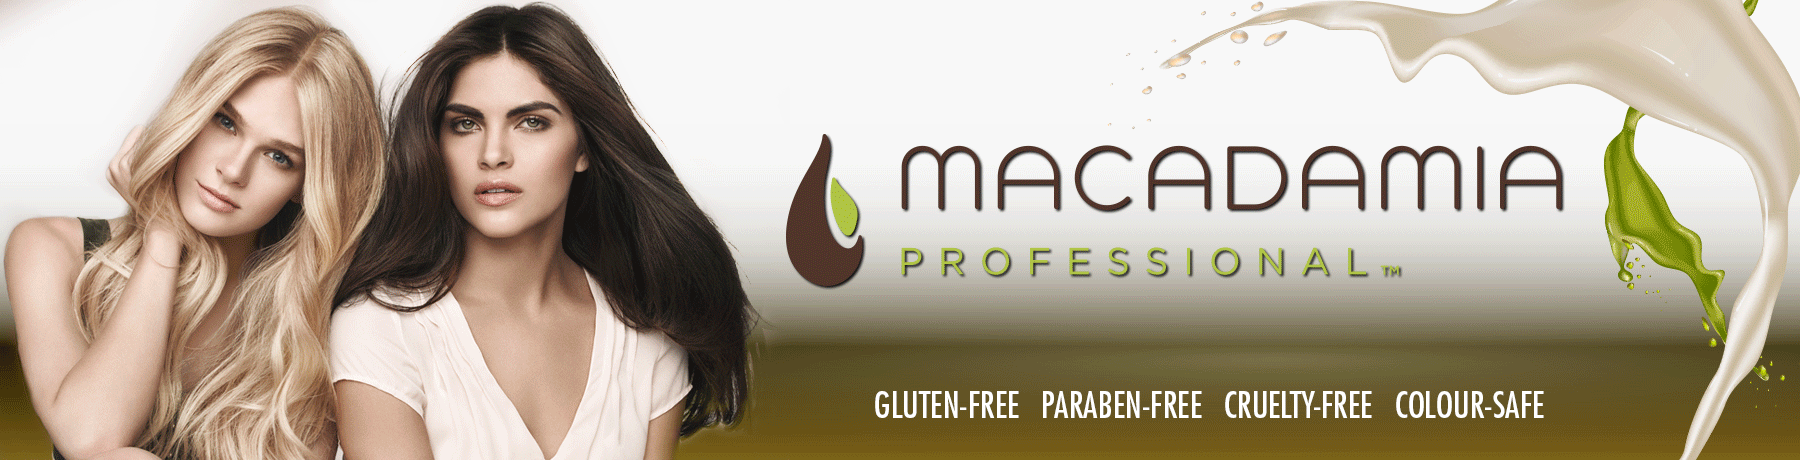 Macadamia Professional Styling